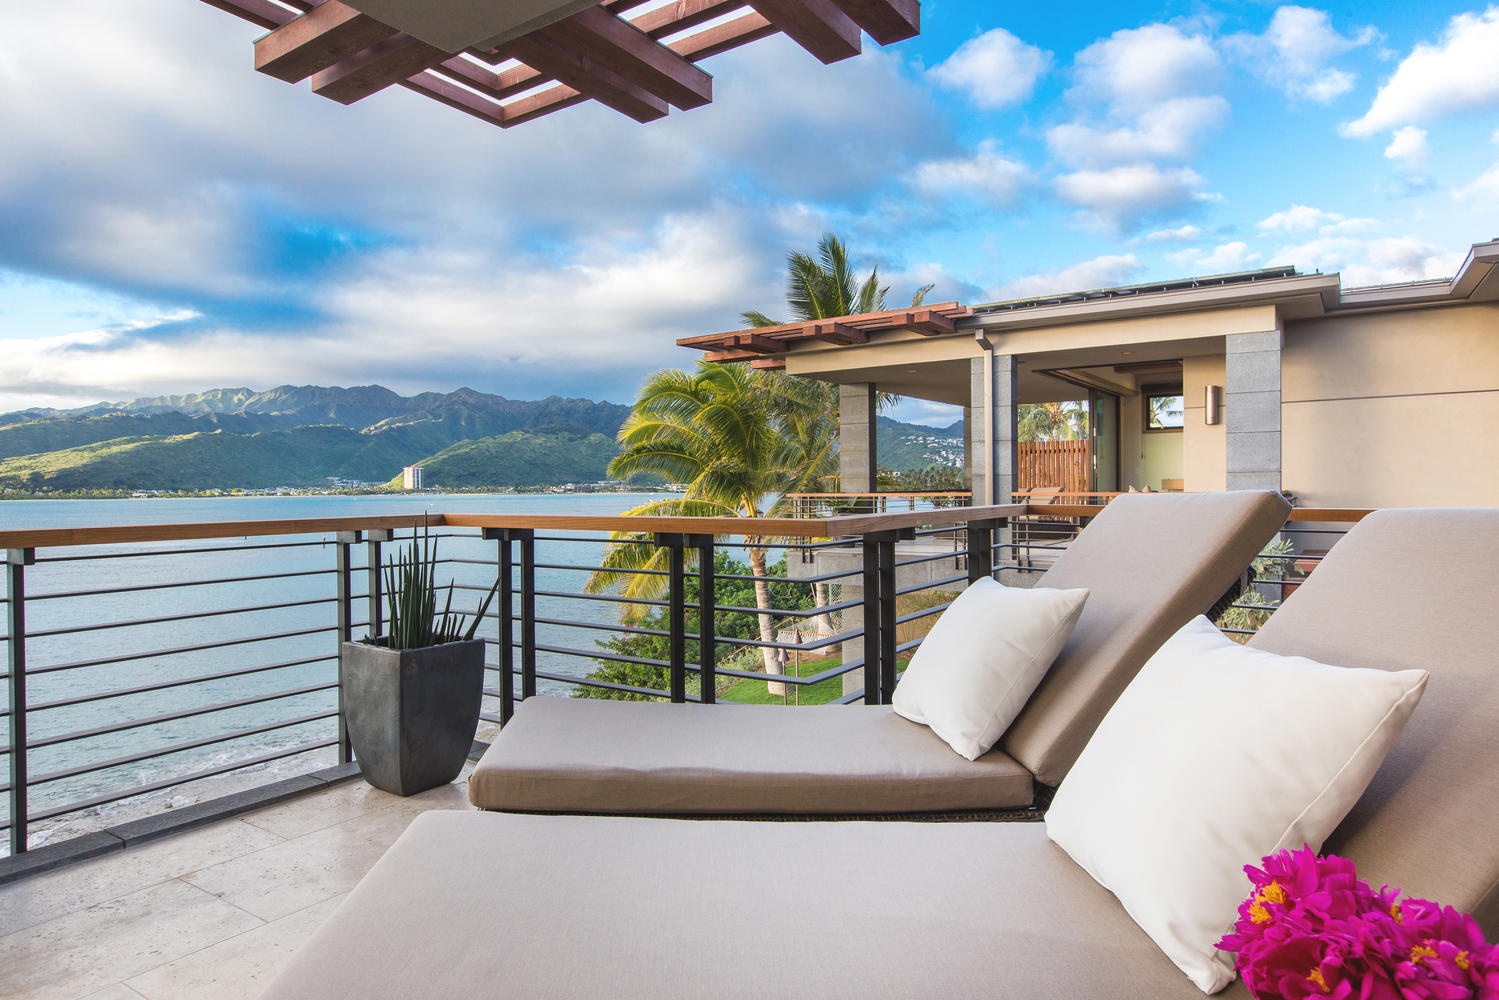 Honolulu Vacation Rentals, Ocean House - Second primary bedroom lanai.